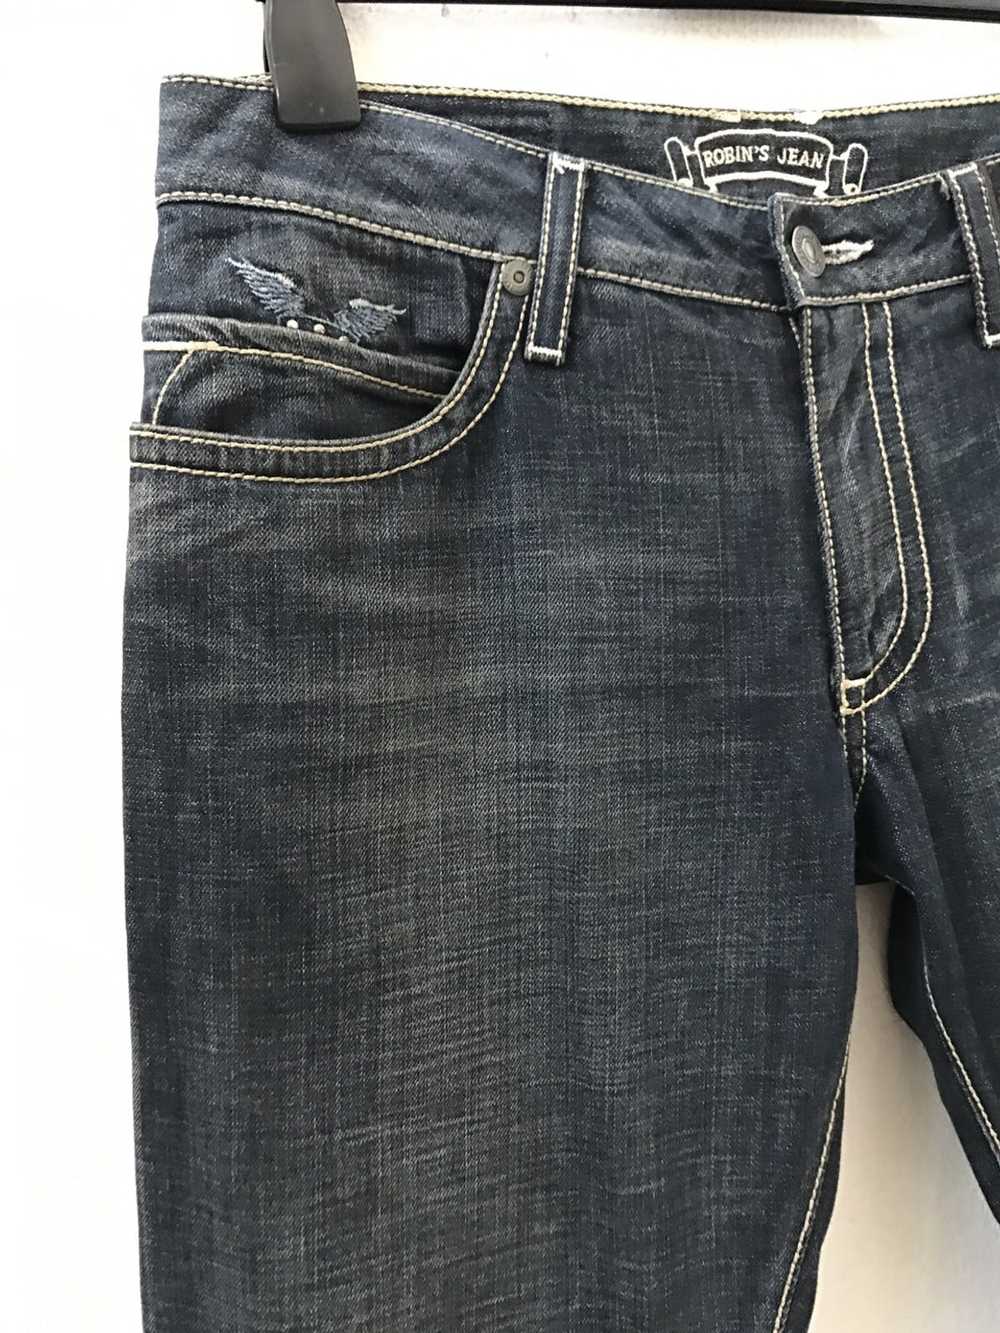 Robins Jeans Leather Studded Selvedge Denim Jeans - image 11